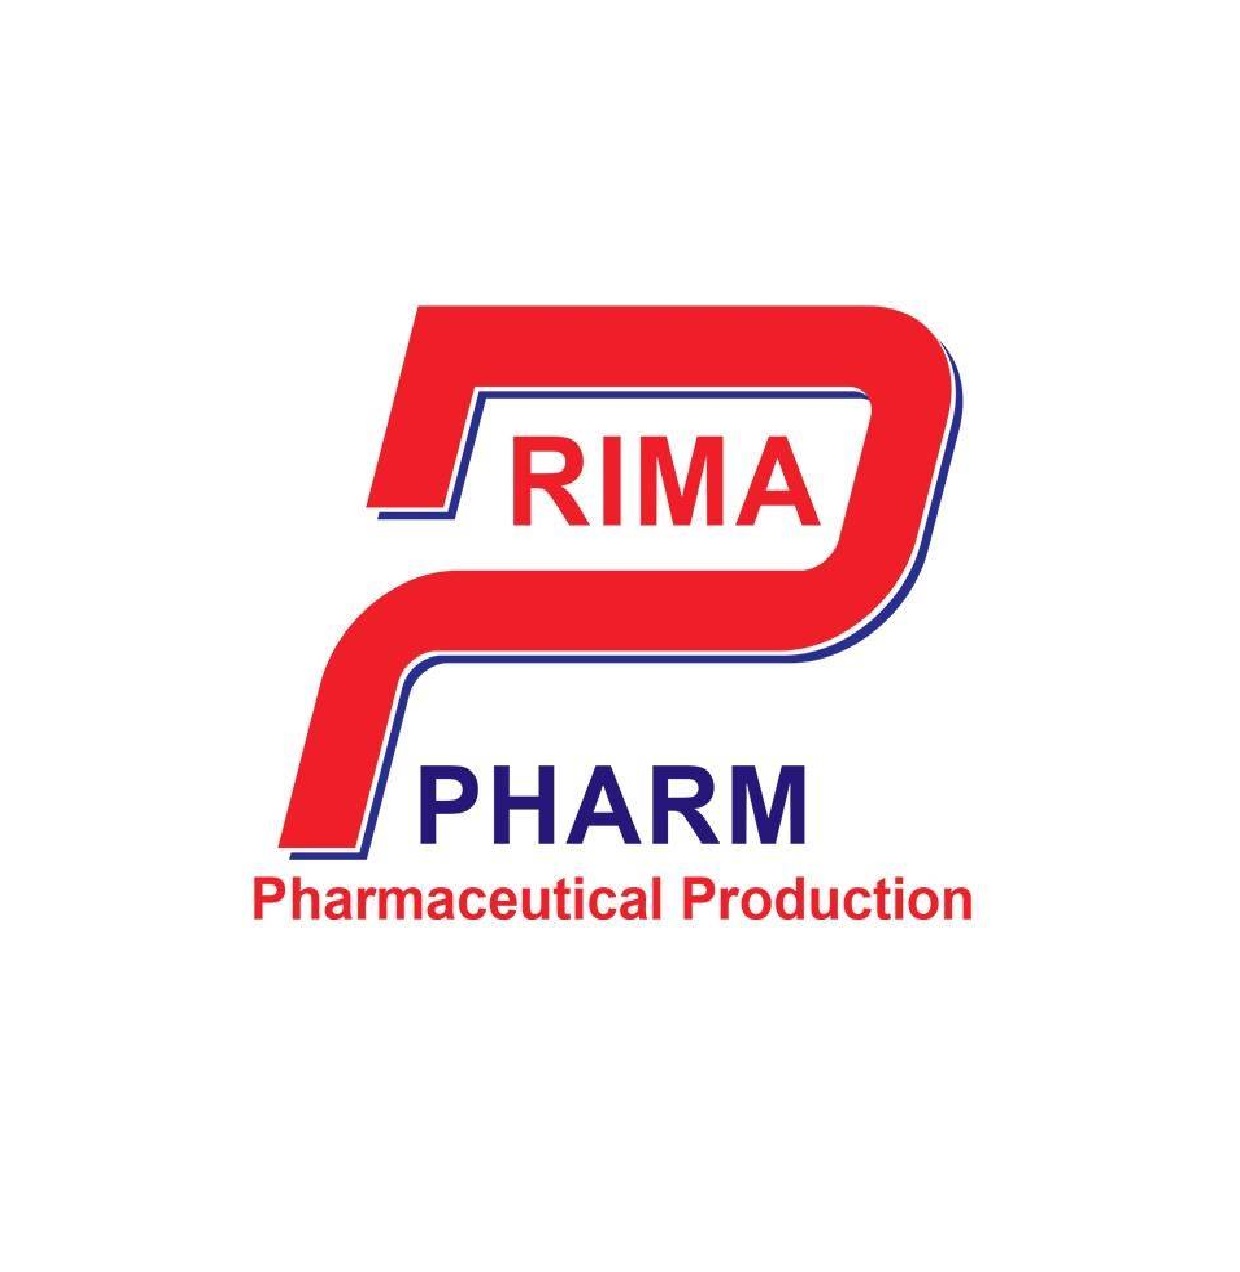 Prima Pharma